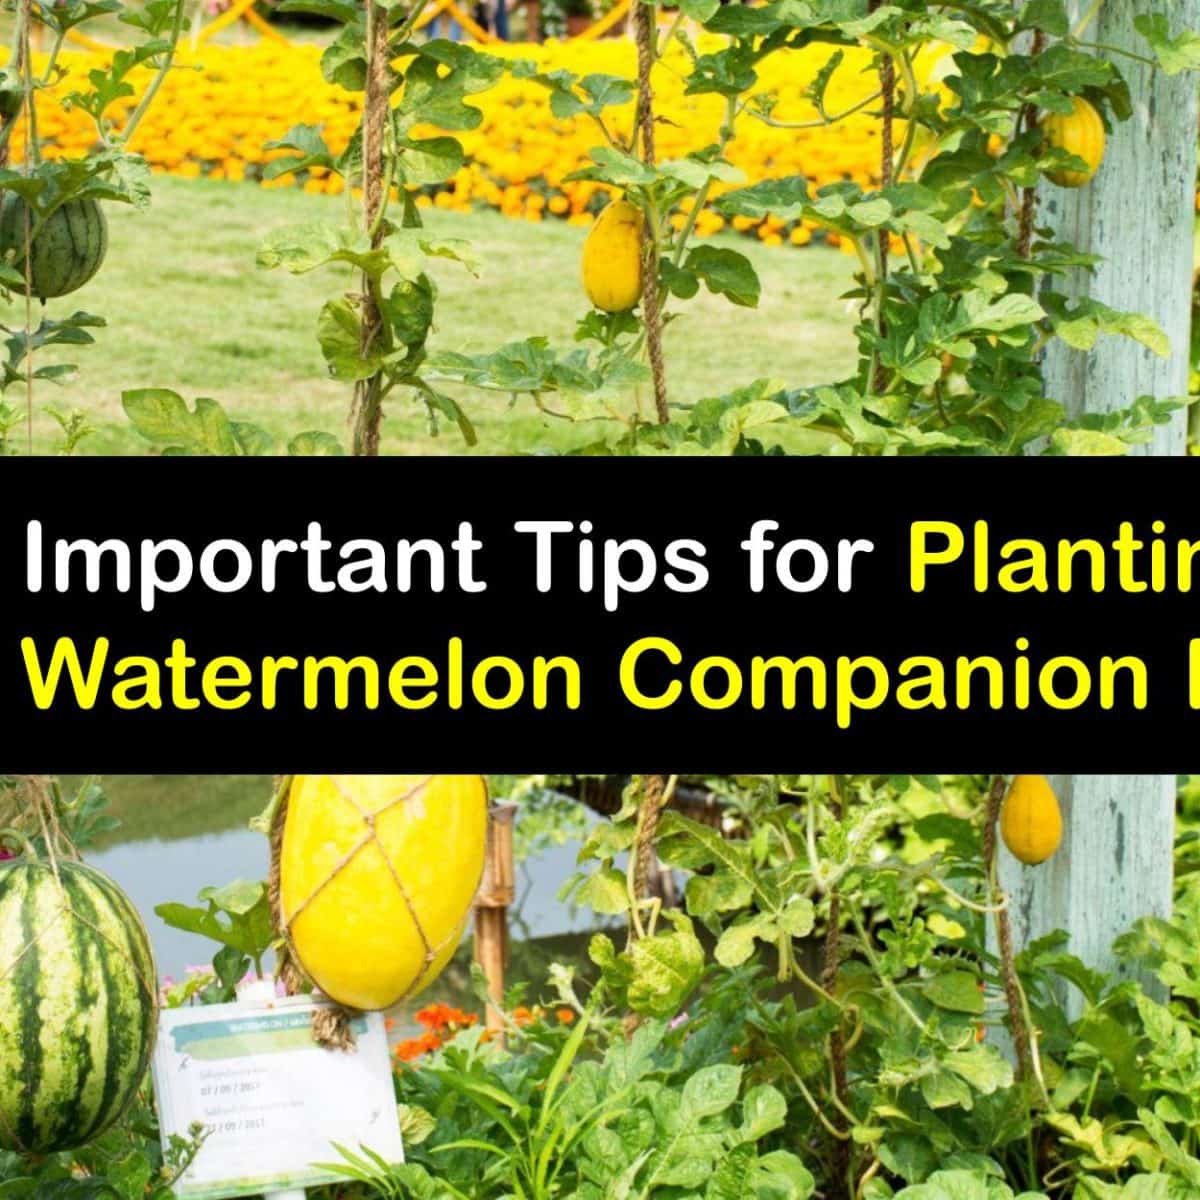 Image of Pumpkins bad companion plants for watermelon